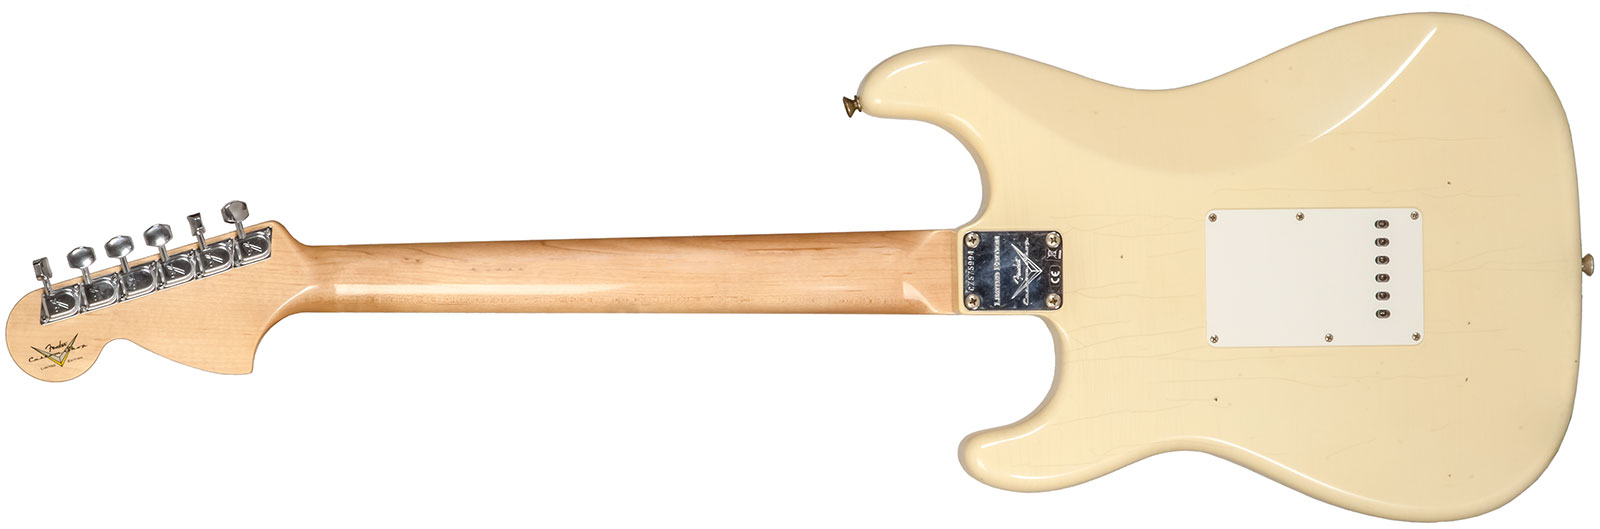 Fender Custom Shop Strat 1969 3s Trem Mn #cz576216 - Journeyman Relic Aged Vintage White - E-Gitarre in Str-Form - Variation 1